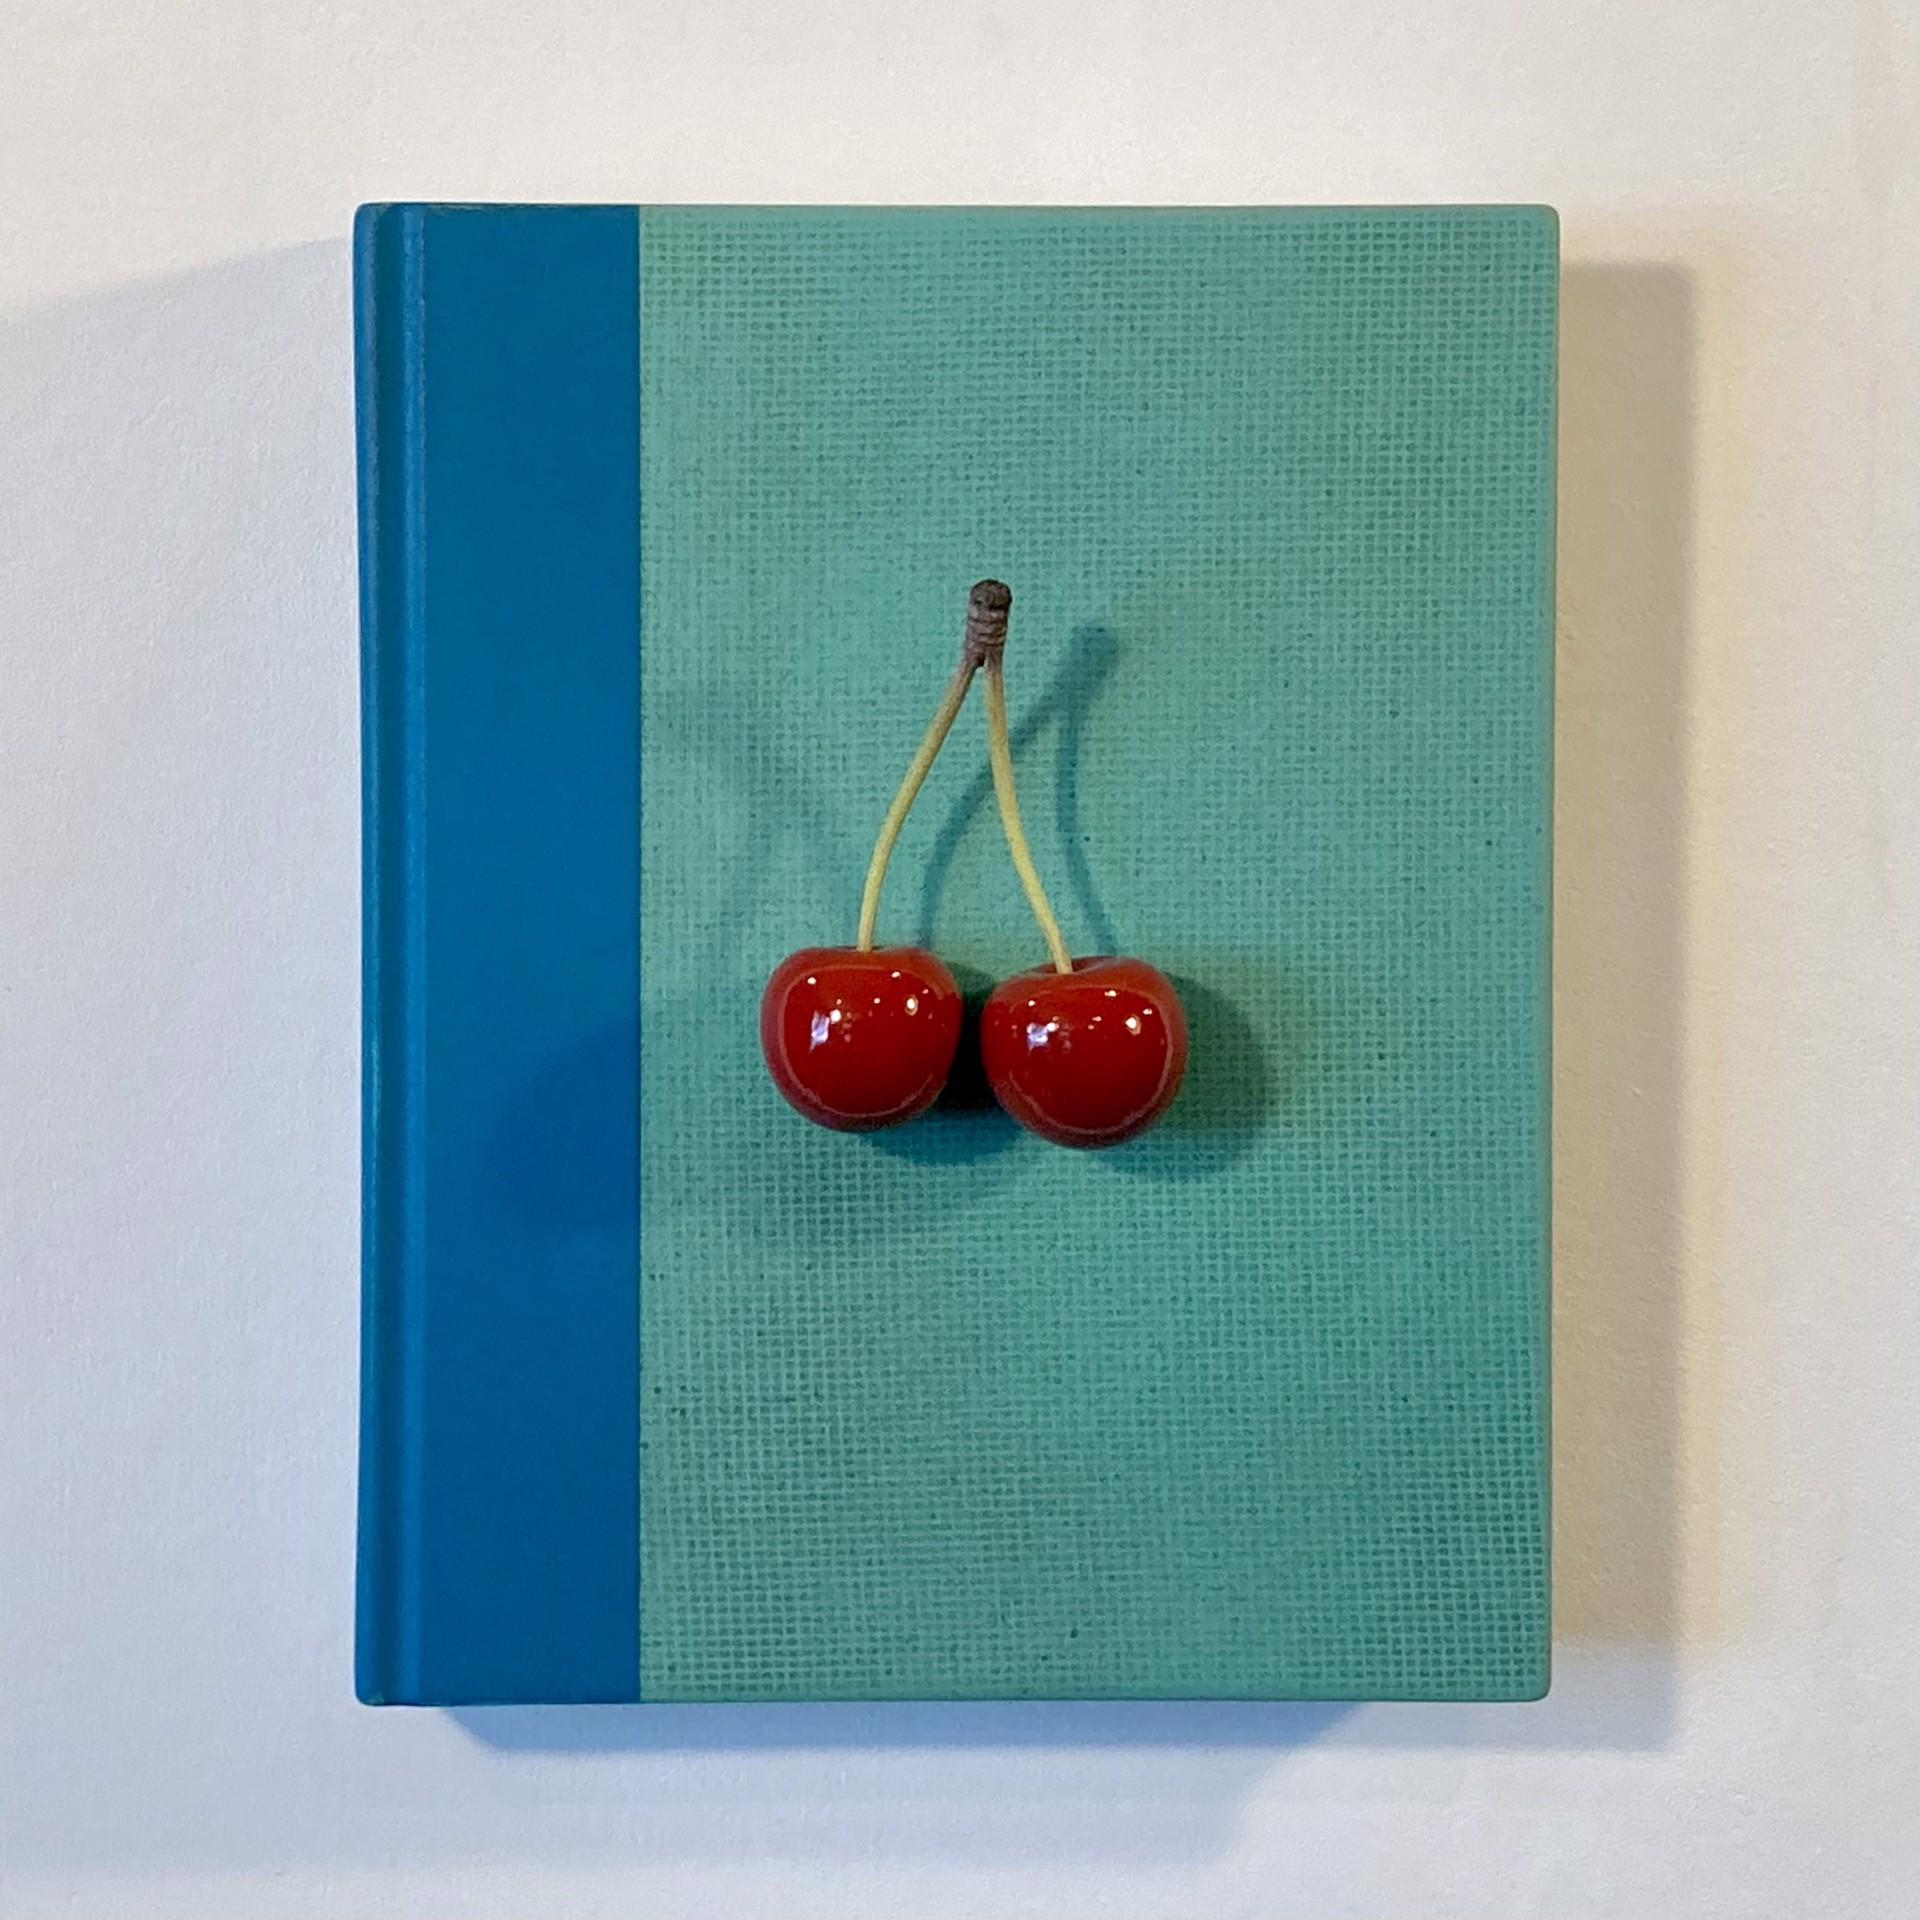 Cherries by Sean O'Meallie